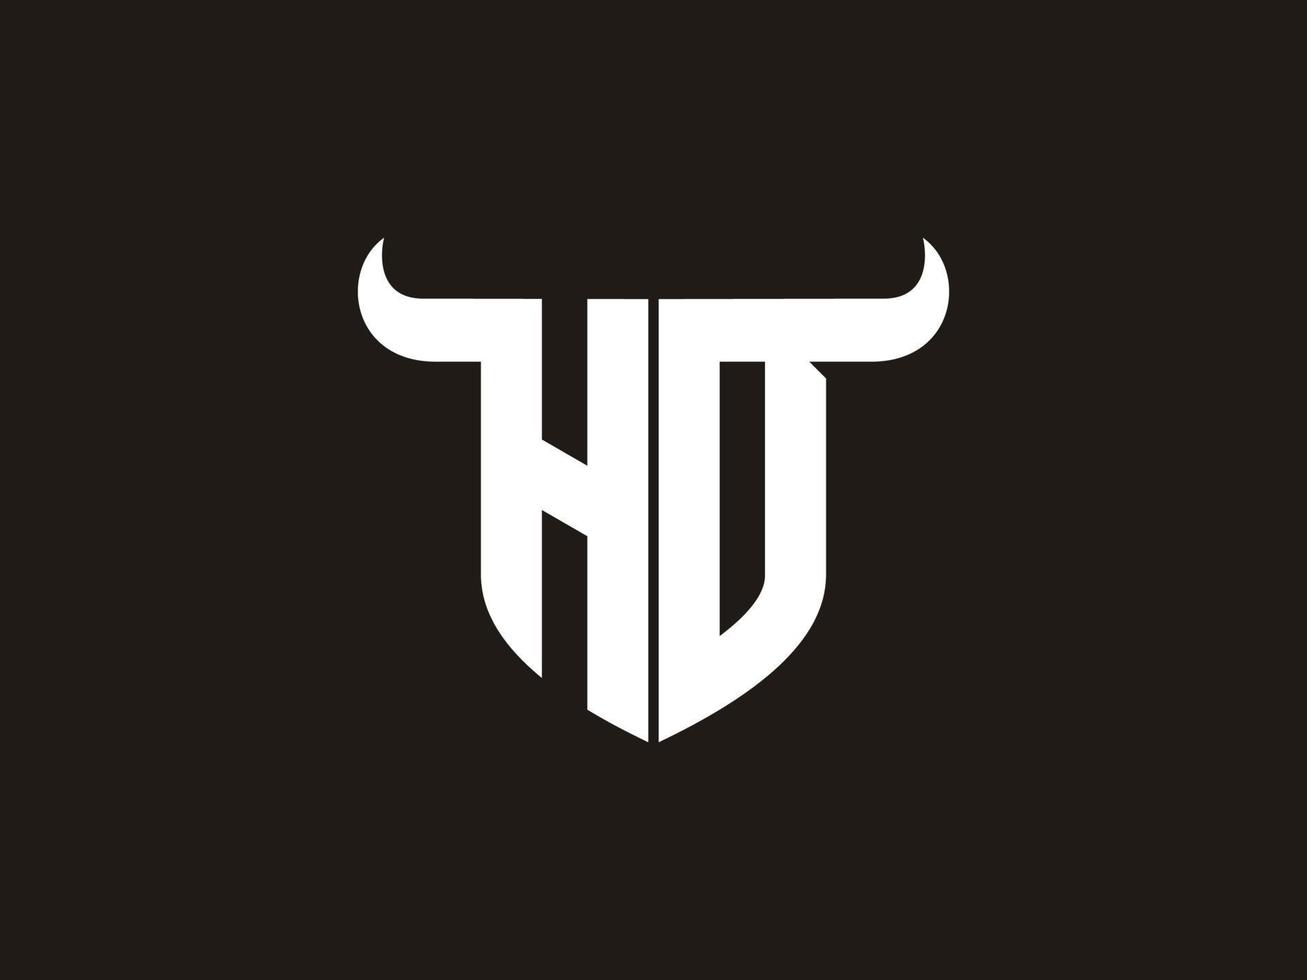 Initial HD Bull Logo Design. vector